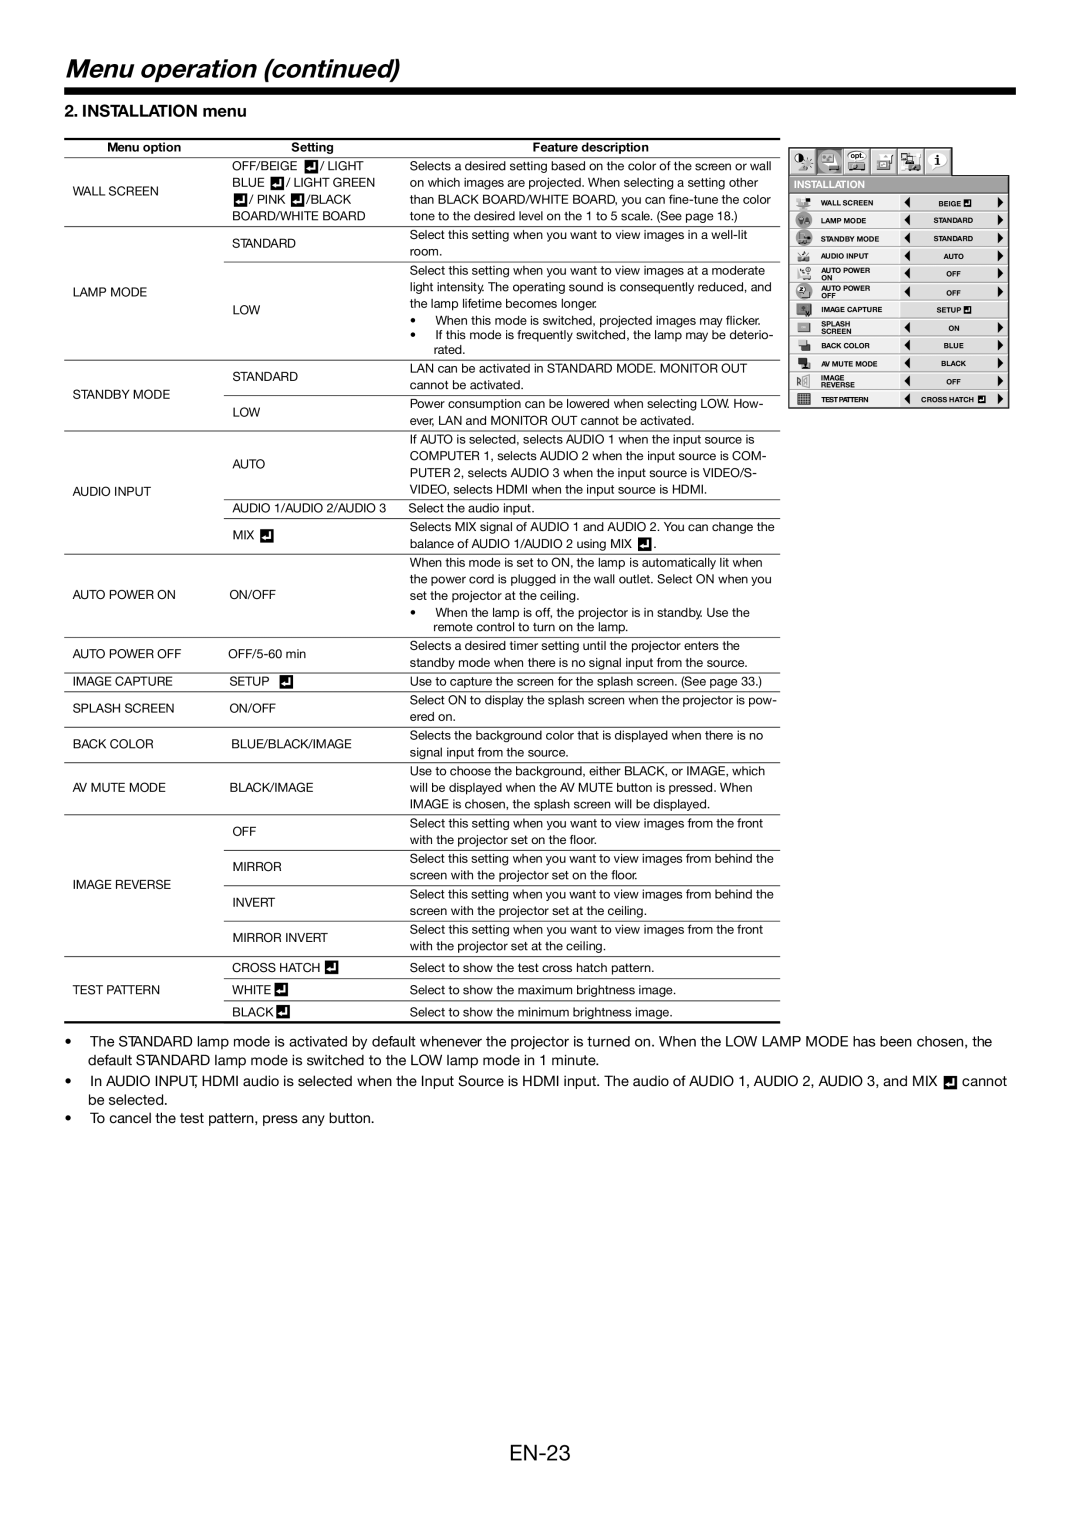 Mitsubishi Electronics FD730U-G user manual EN-23, Menu operation continued, INSTALLATION menu 